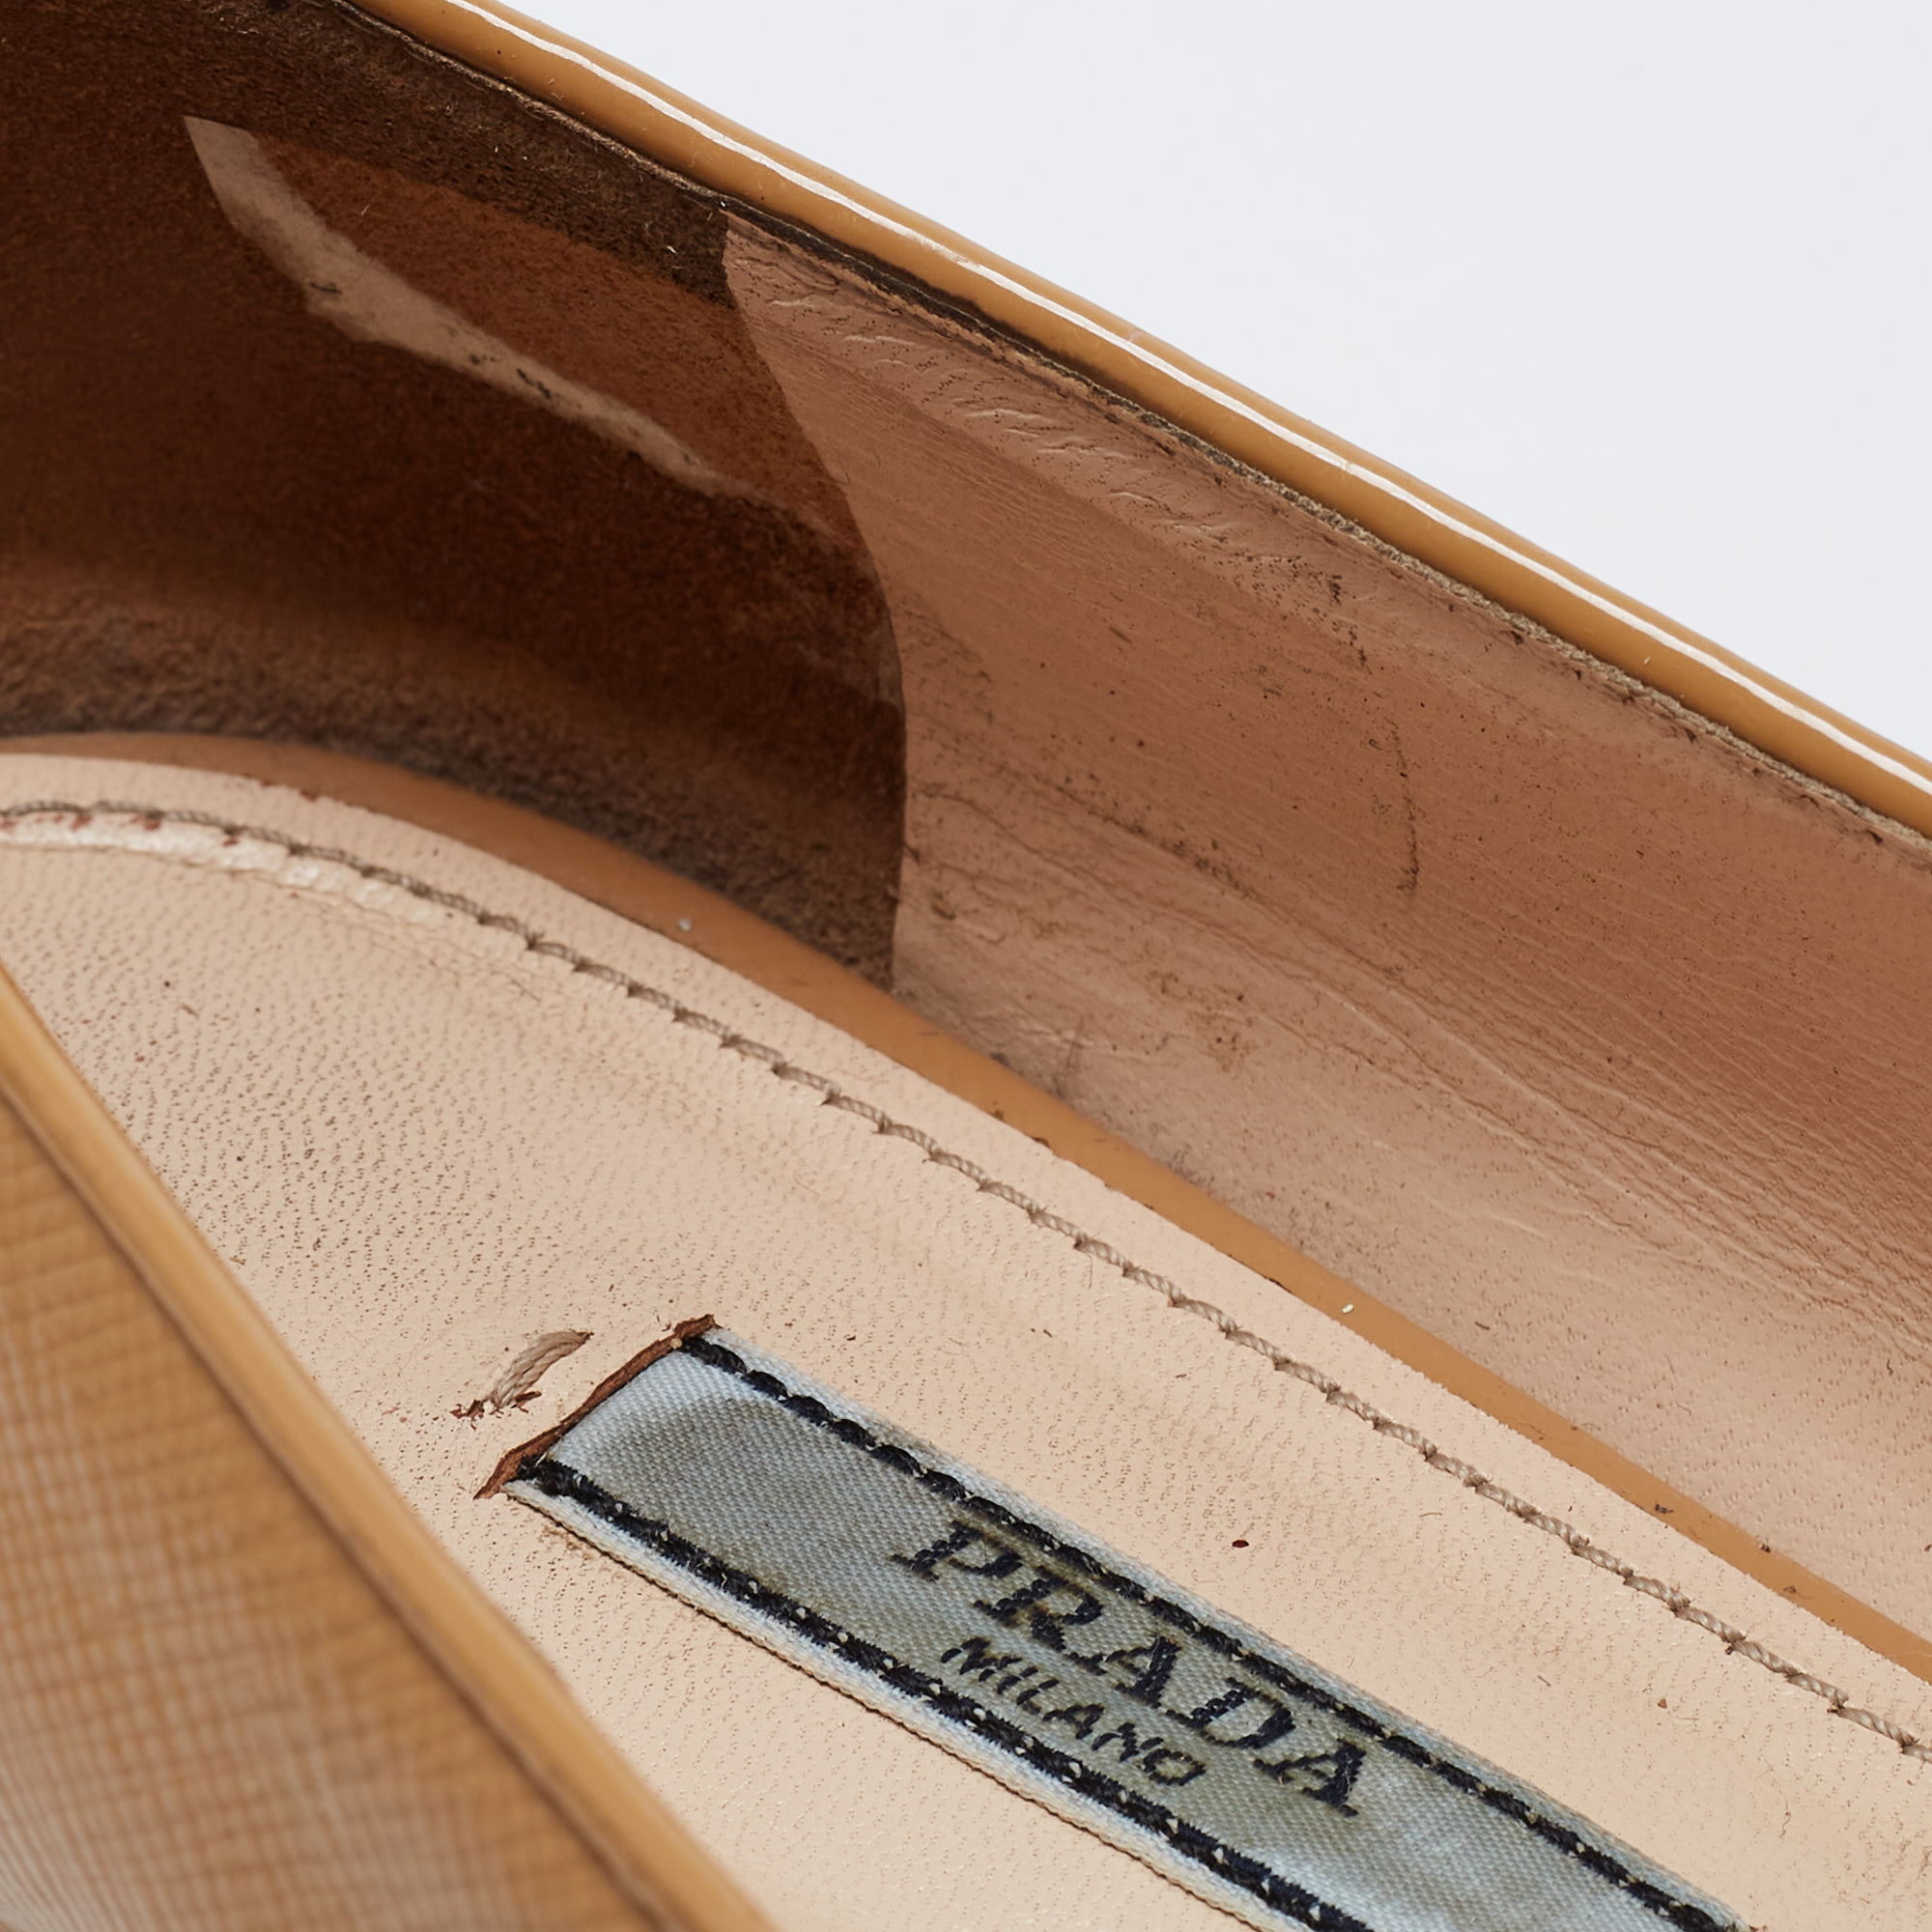 Prada Beige Patent Leather Smoking Flats Size 37.5